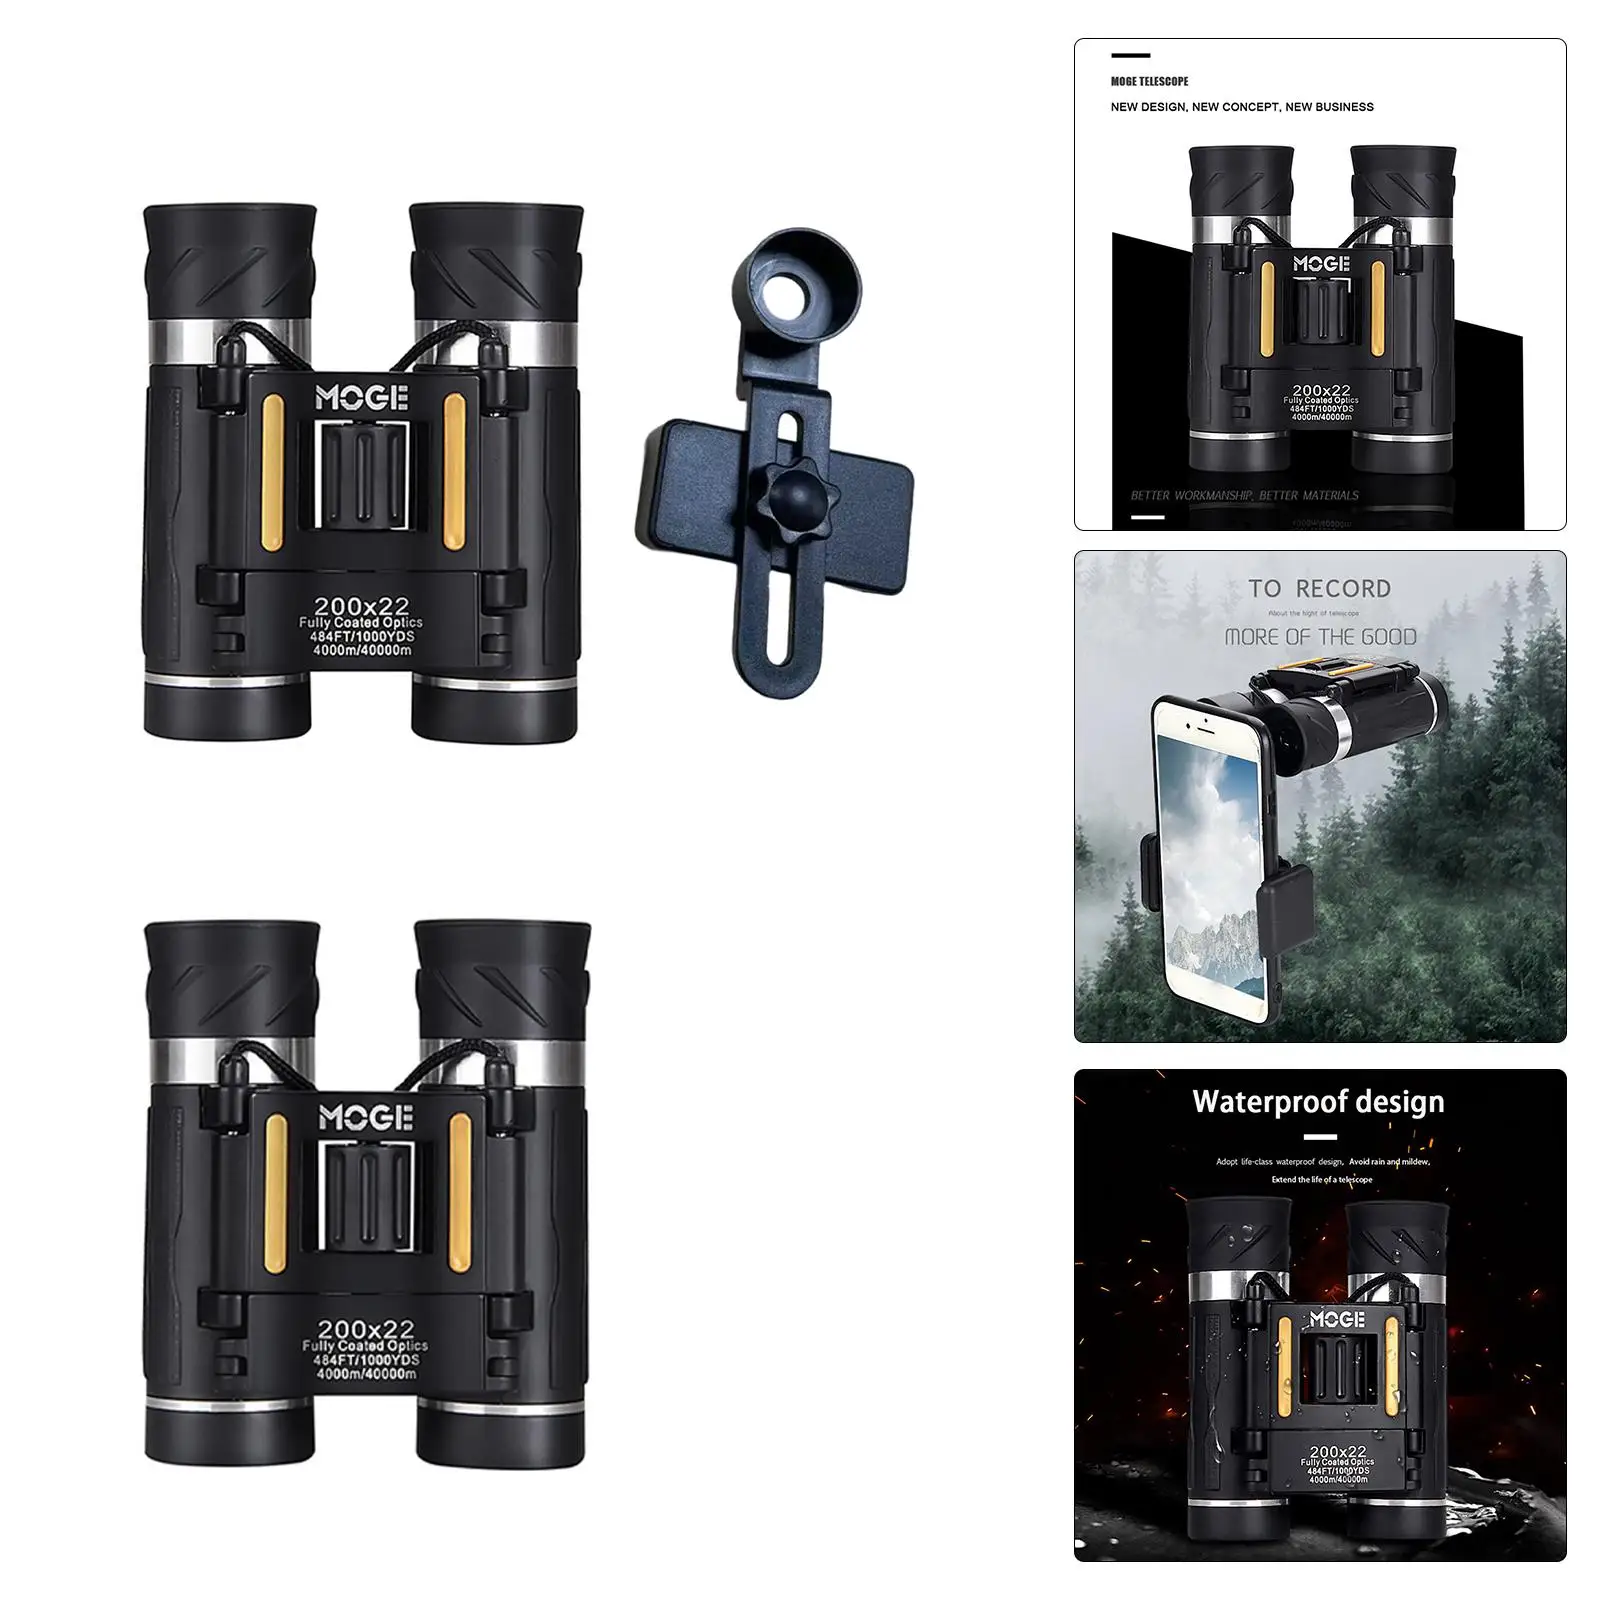 200x22 Large Eyepiece Professional Compact Small IPX7 Waterproof Durable Binoculars for Hiking Opera Sightseeing Wildlife Black